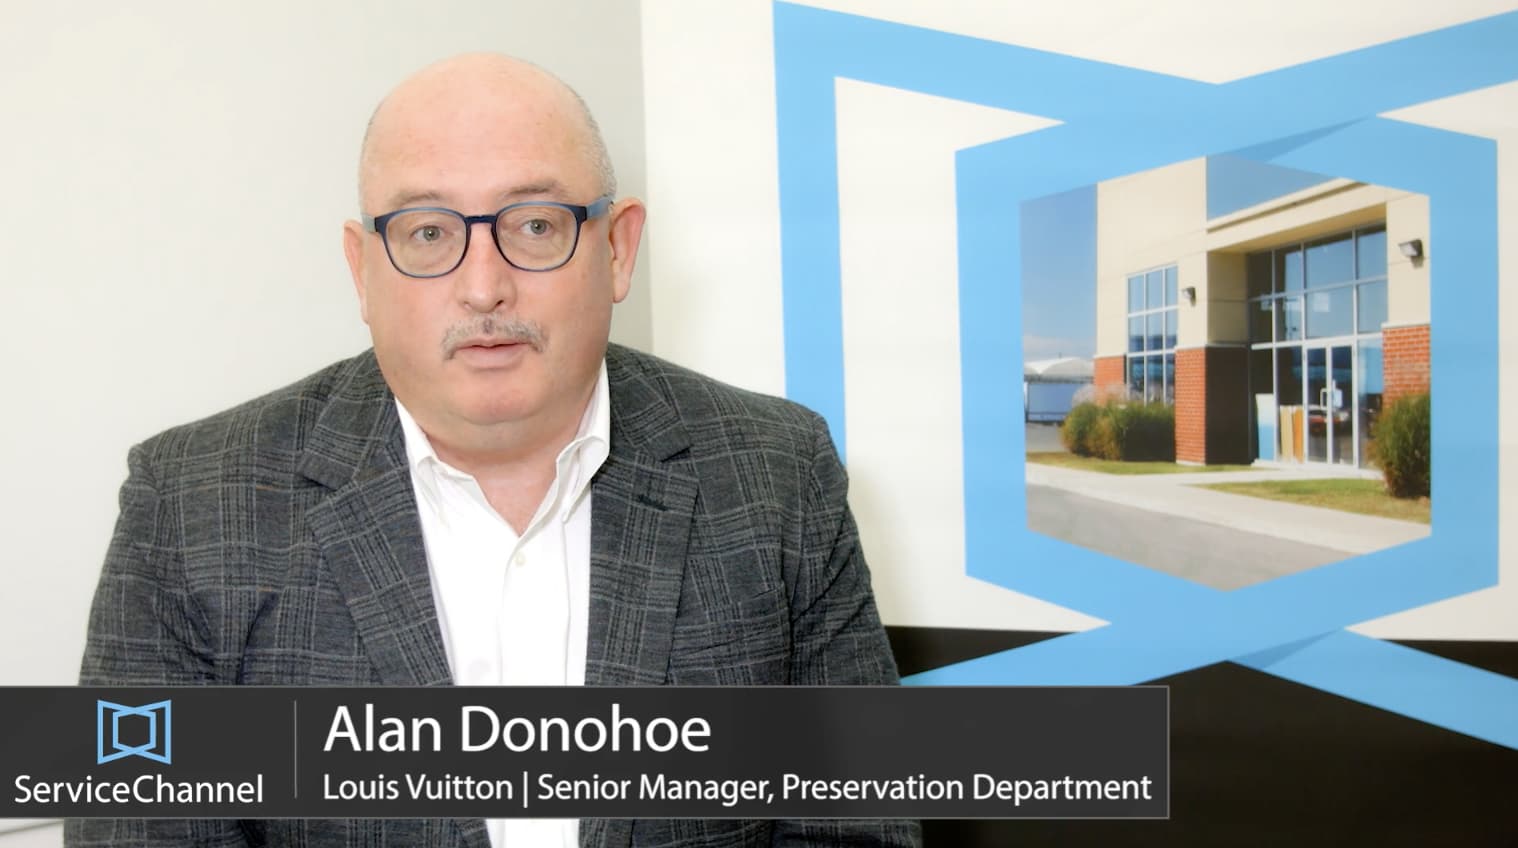 ServiceChannel - Alan Donohoe - Louis Vuitton - Senior Manager, Preservation Department